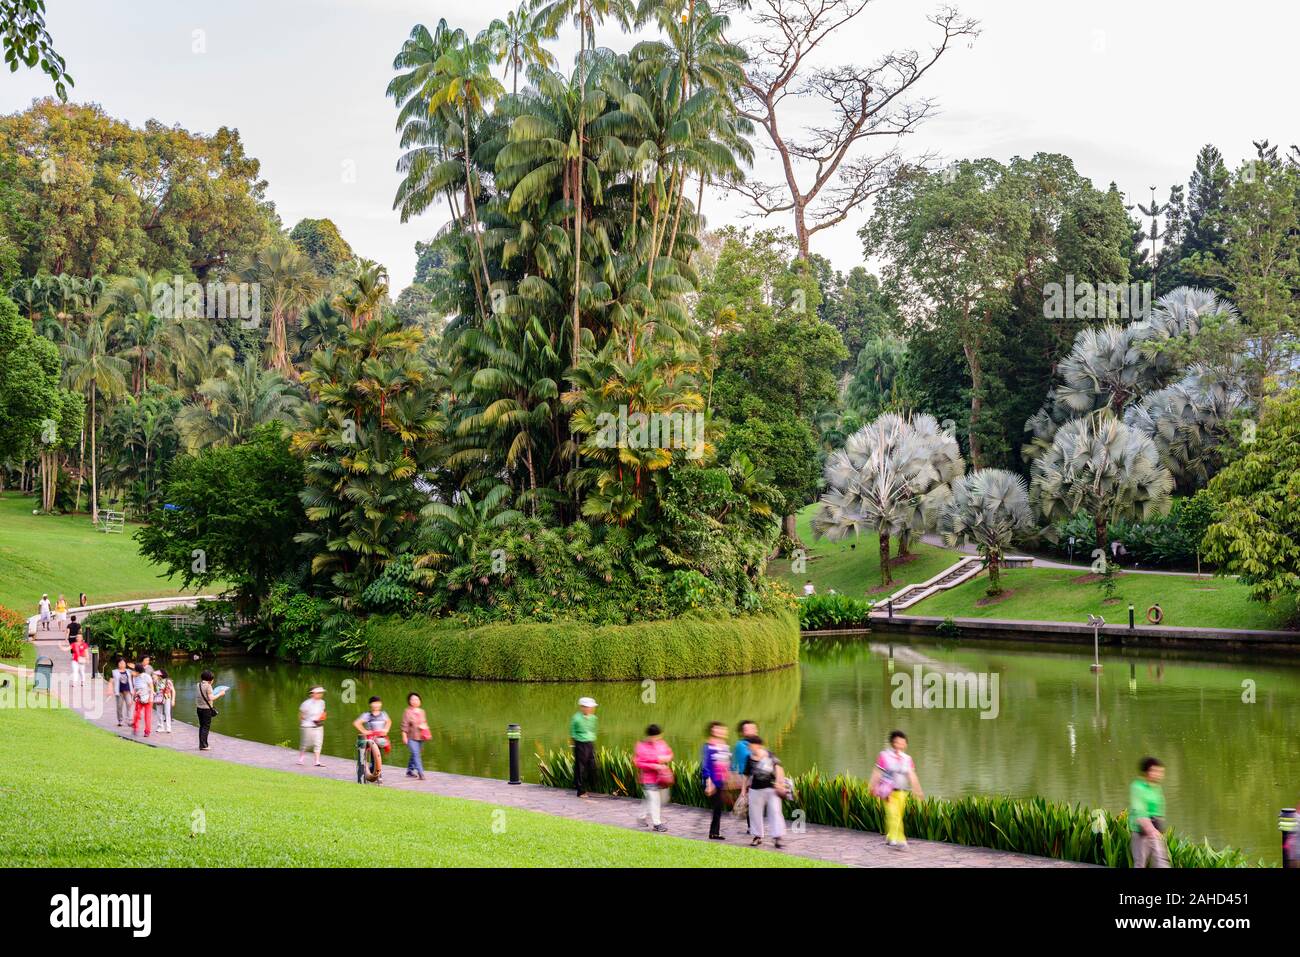 Palm trees, tropical vegetation, artificial lake, park, Singapore Botanic Gardens, Singapore Stock Photo